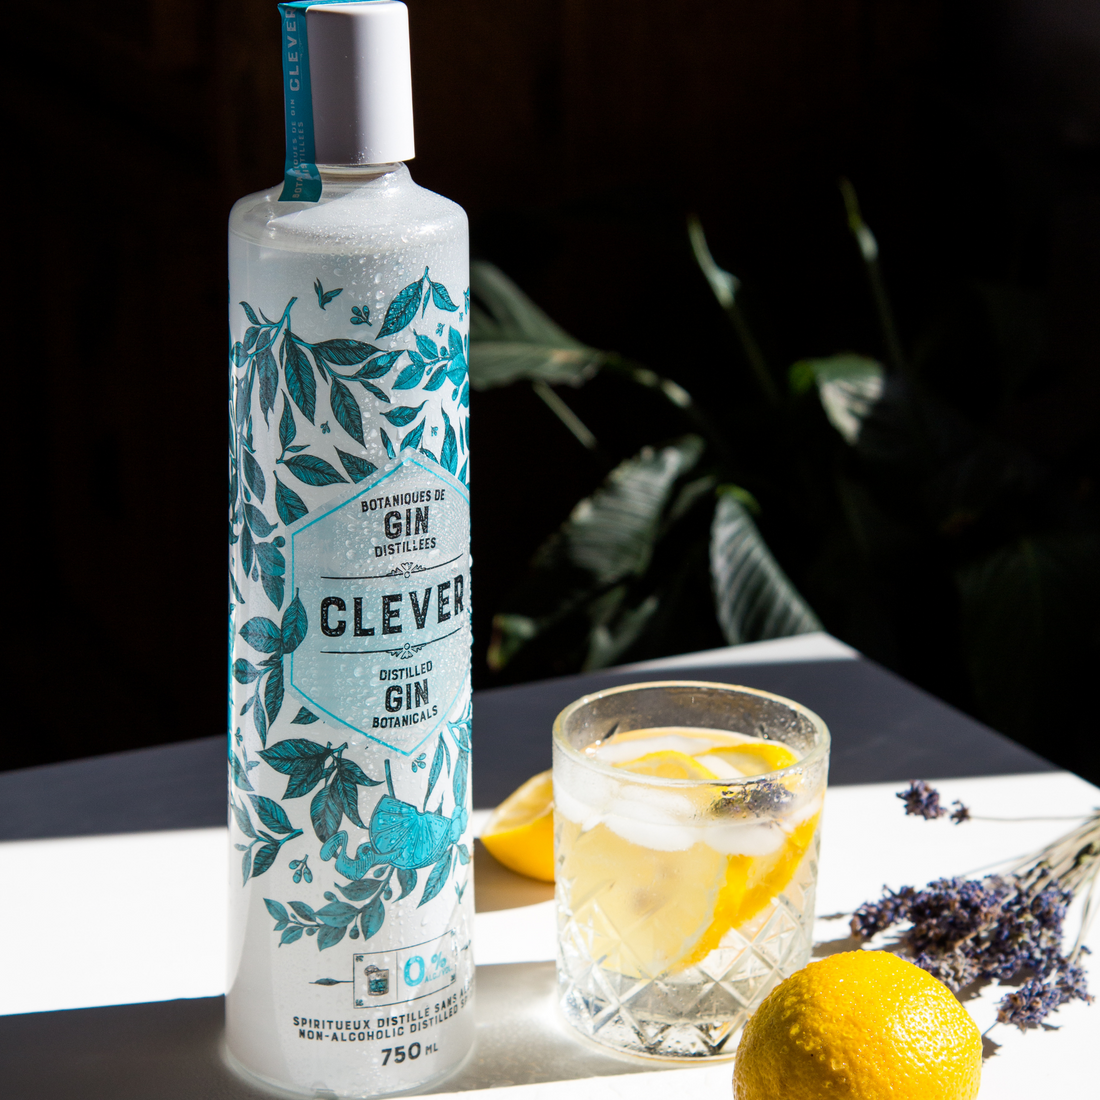 A photo of a bottle of Clever Distilled Gin Botanicals, lavender garnish, lemons, and a lavender collins drinks.